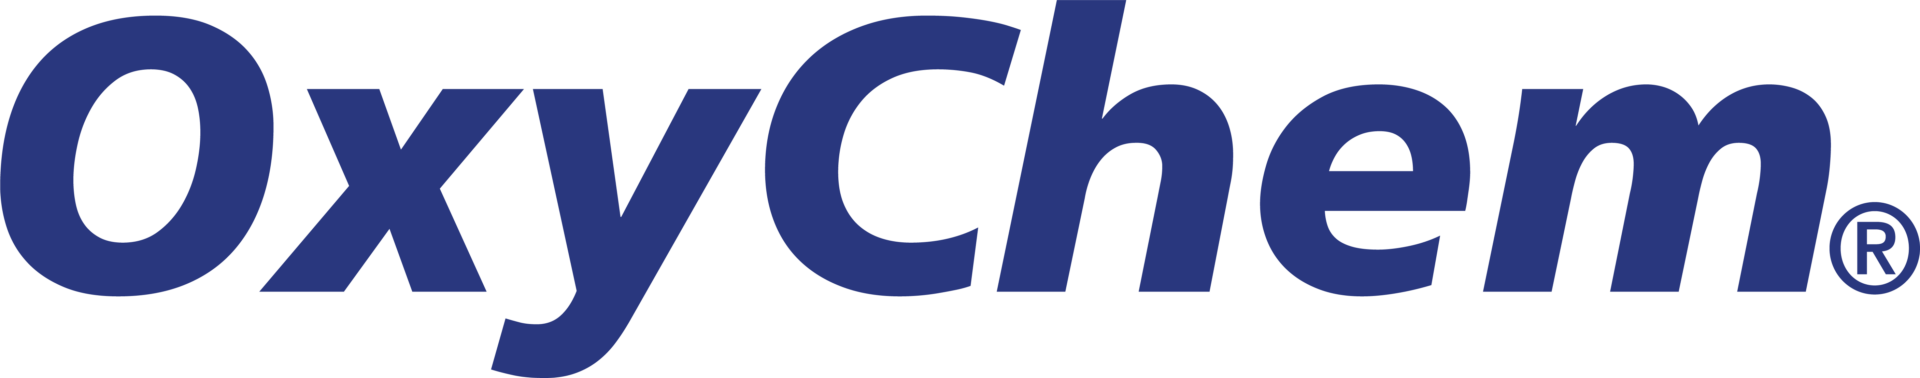 https://aviinc.org/wp-content/uploads/2021/08/Logo-OxyChem-0001.png